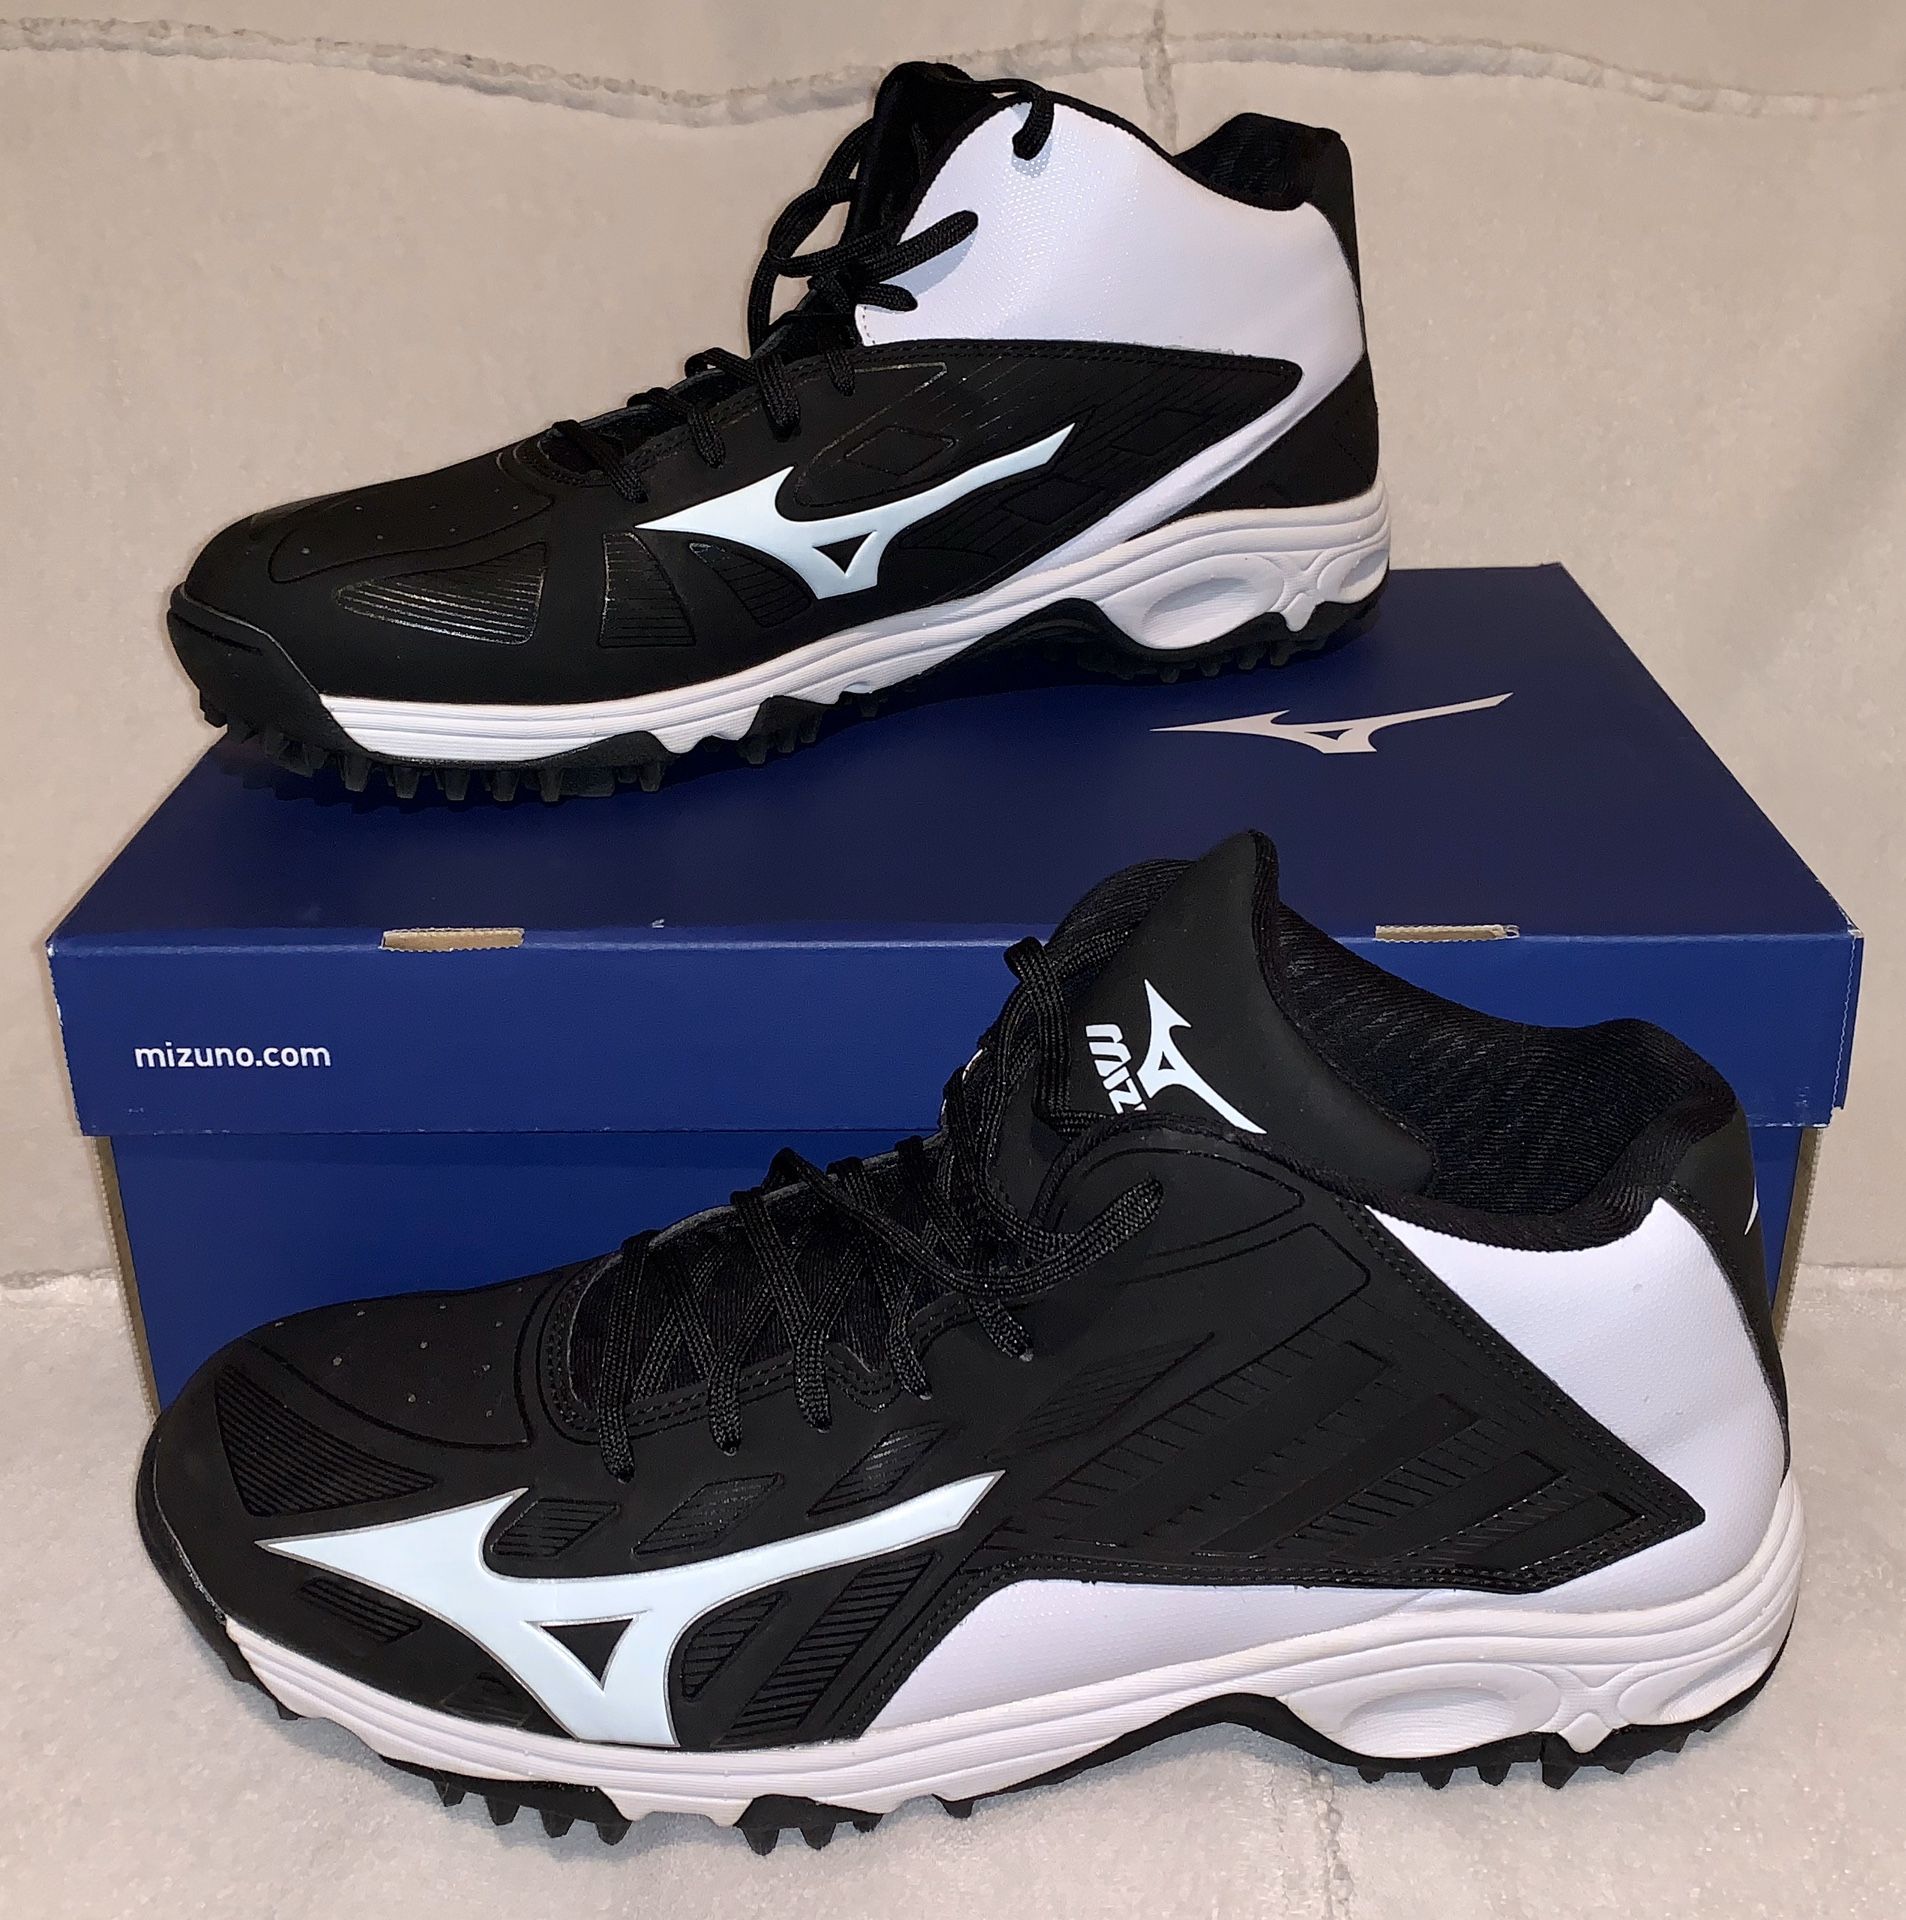 Mizuno Men’s Baseball Turf Shoes size 15